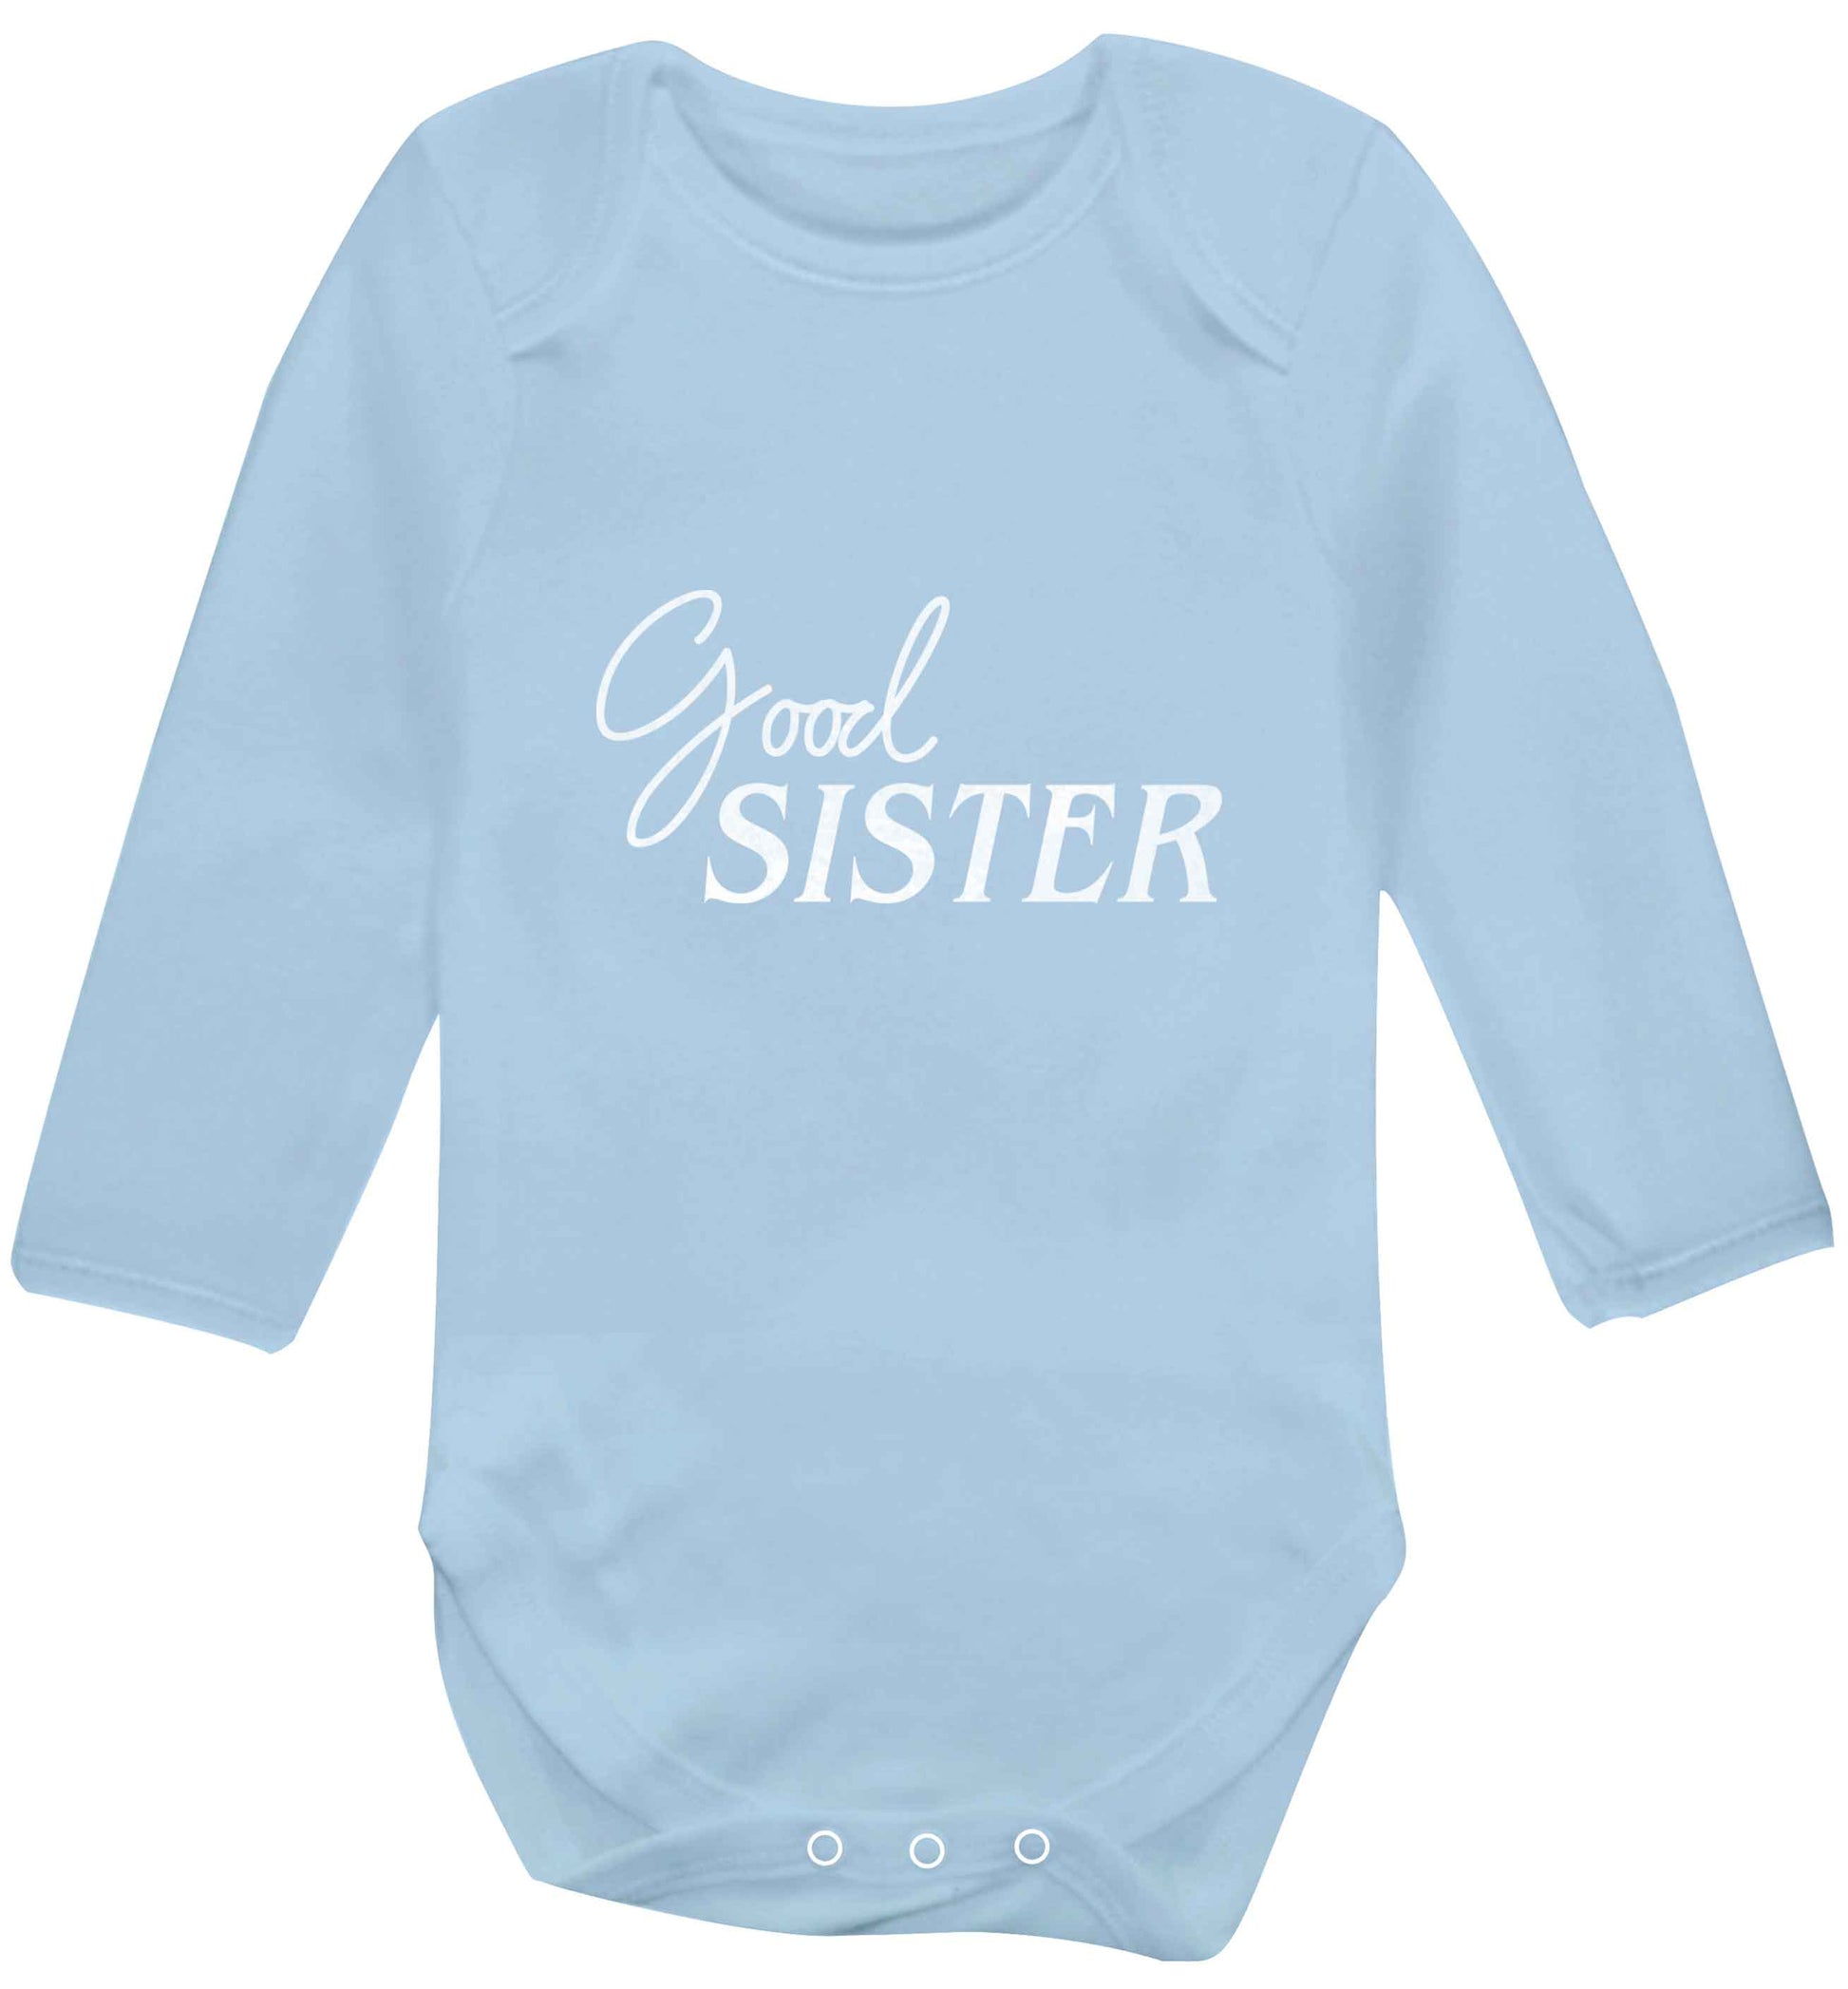 Good sister baby vest long sleeved pale blue 6-12 months